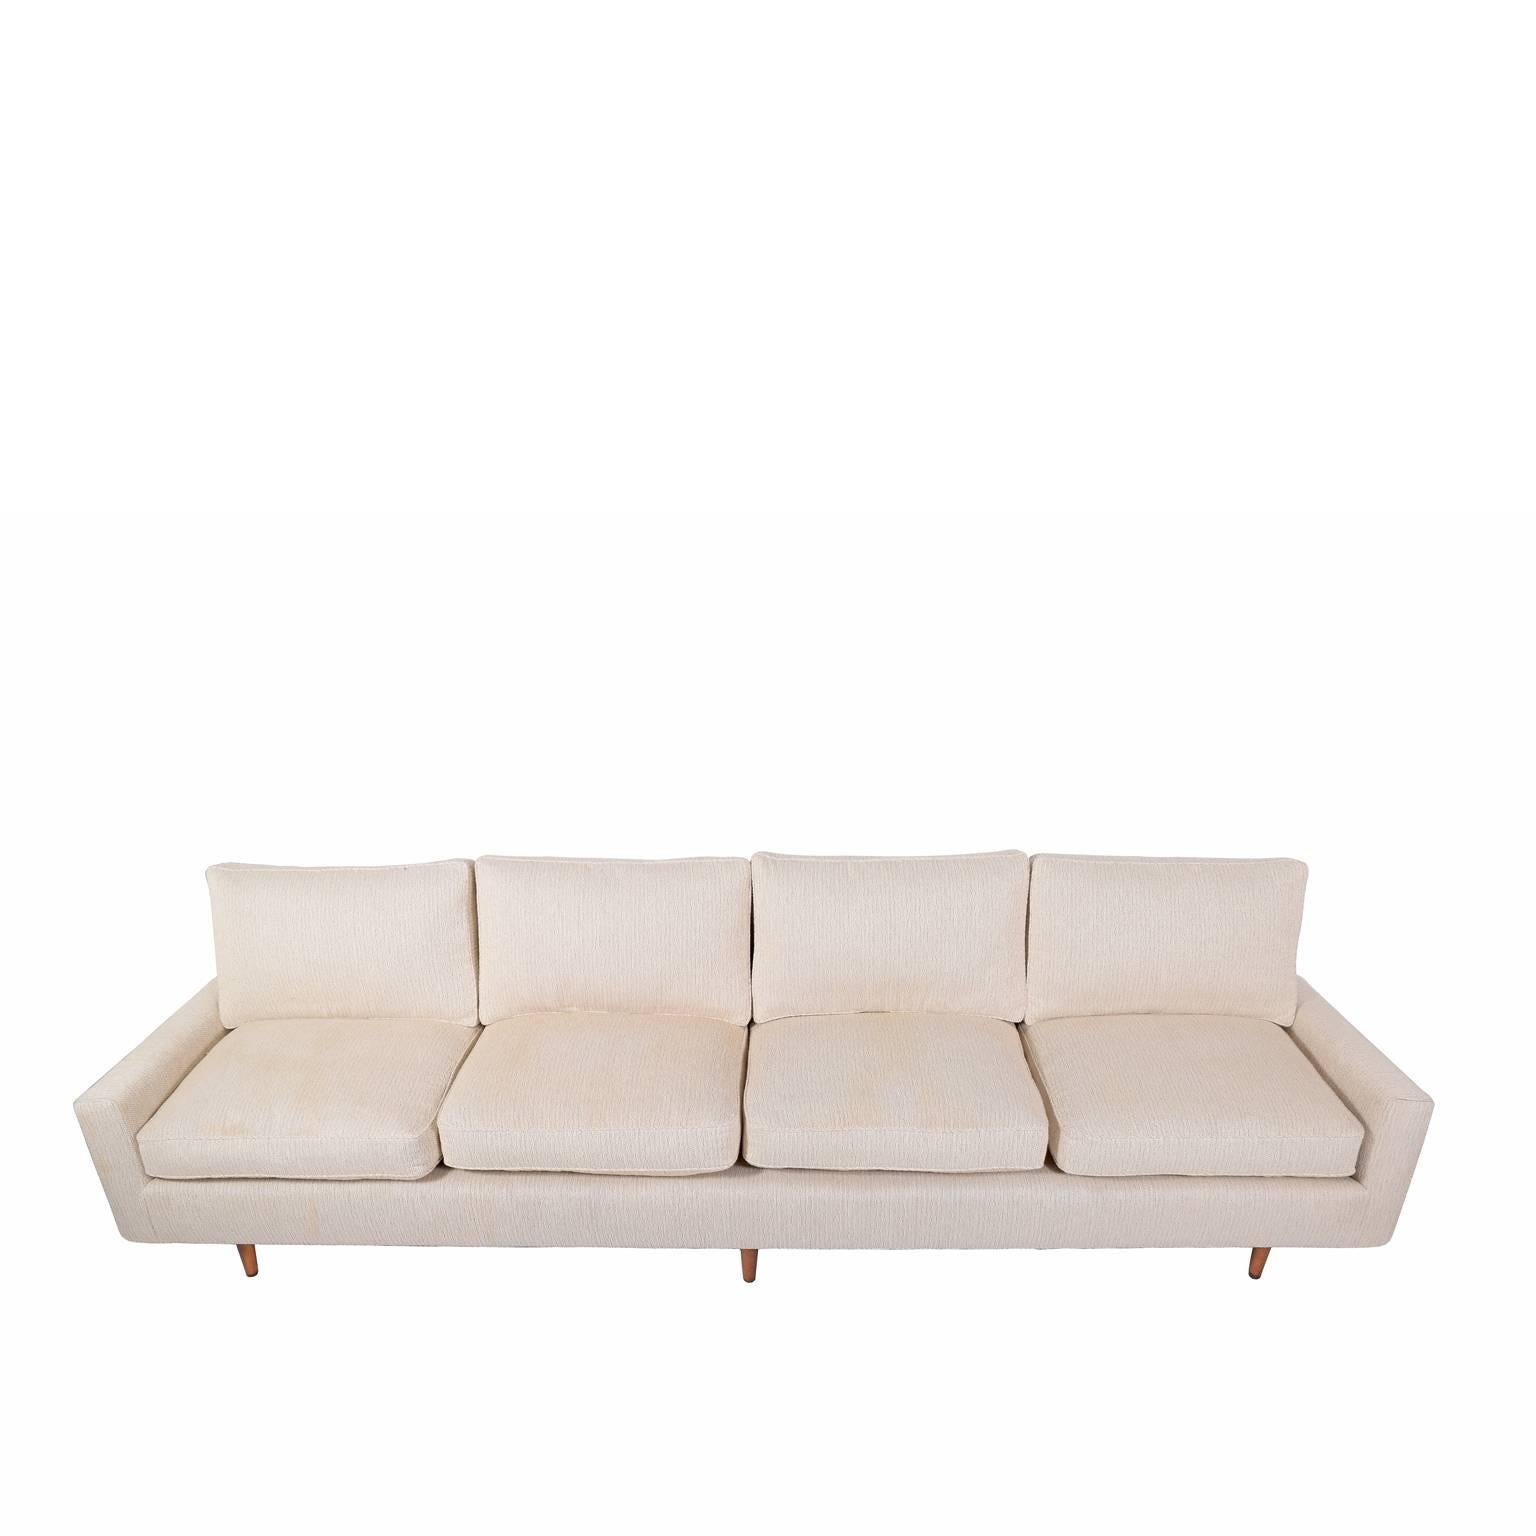 Modern Rare Four-Seat Florence Knoll Sofa #26